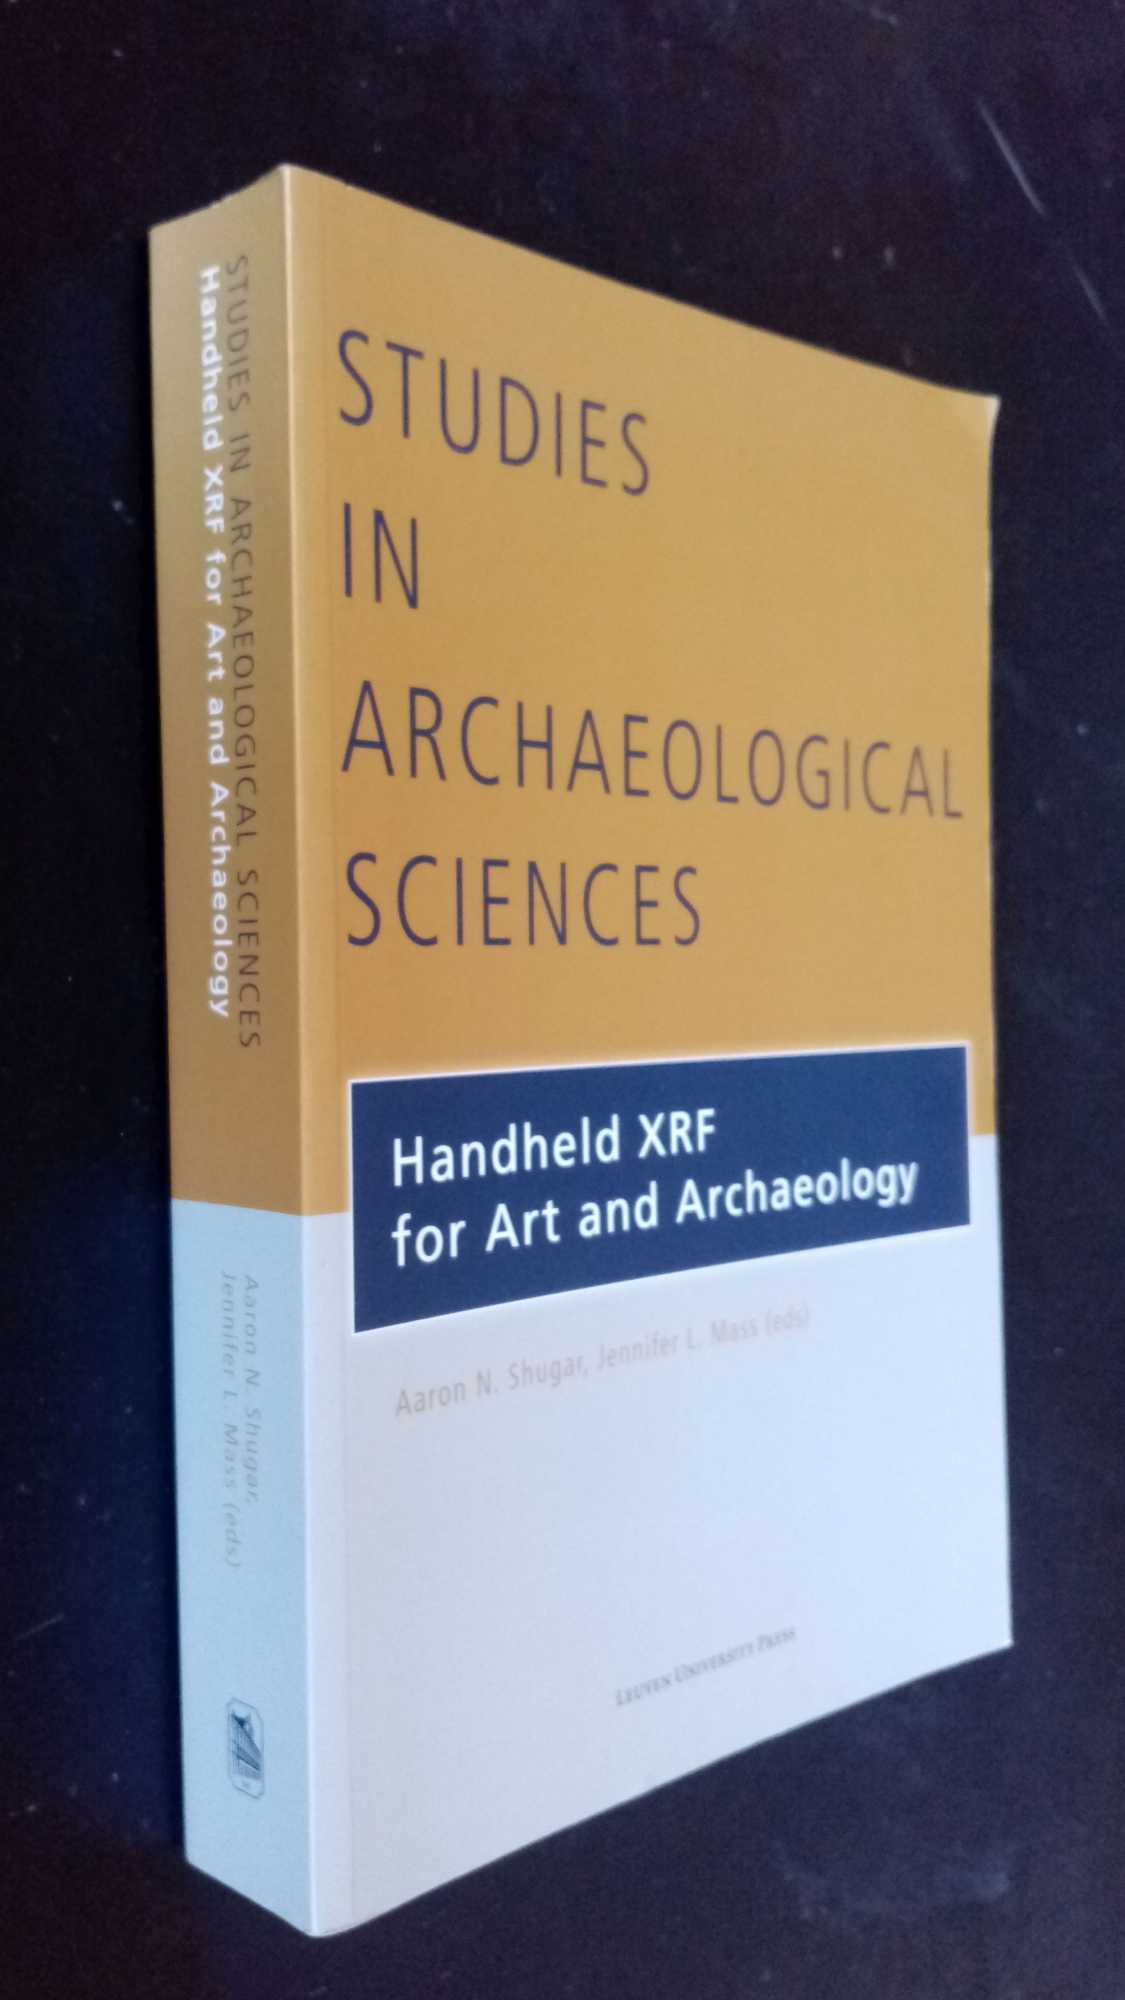 Aaron Shugar et al, eds. - Handheld XRF for Art and Archaeology (Studies in Archaeological Sciences)